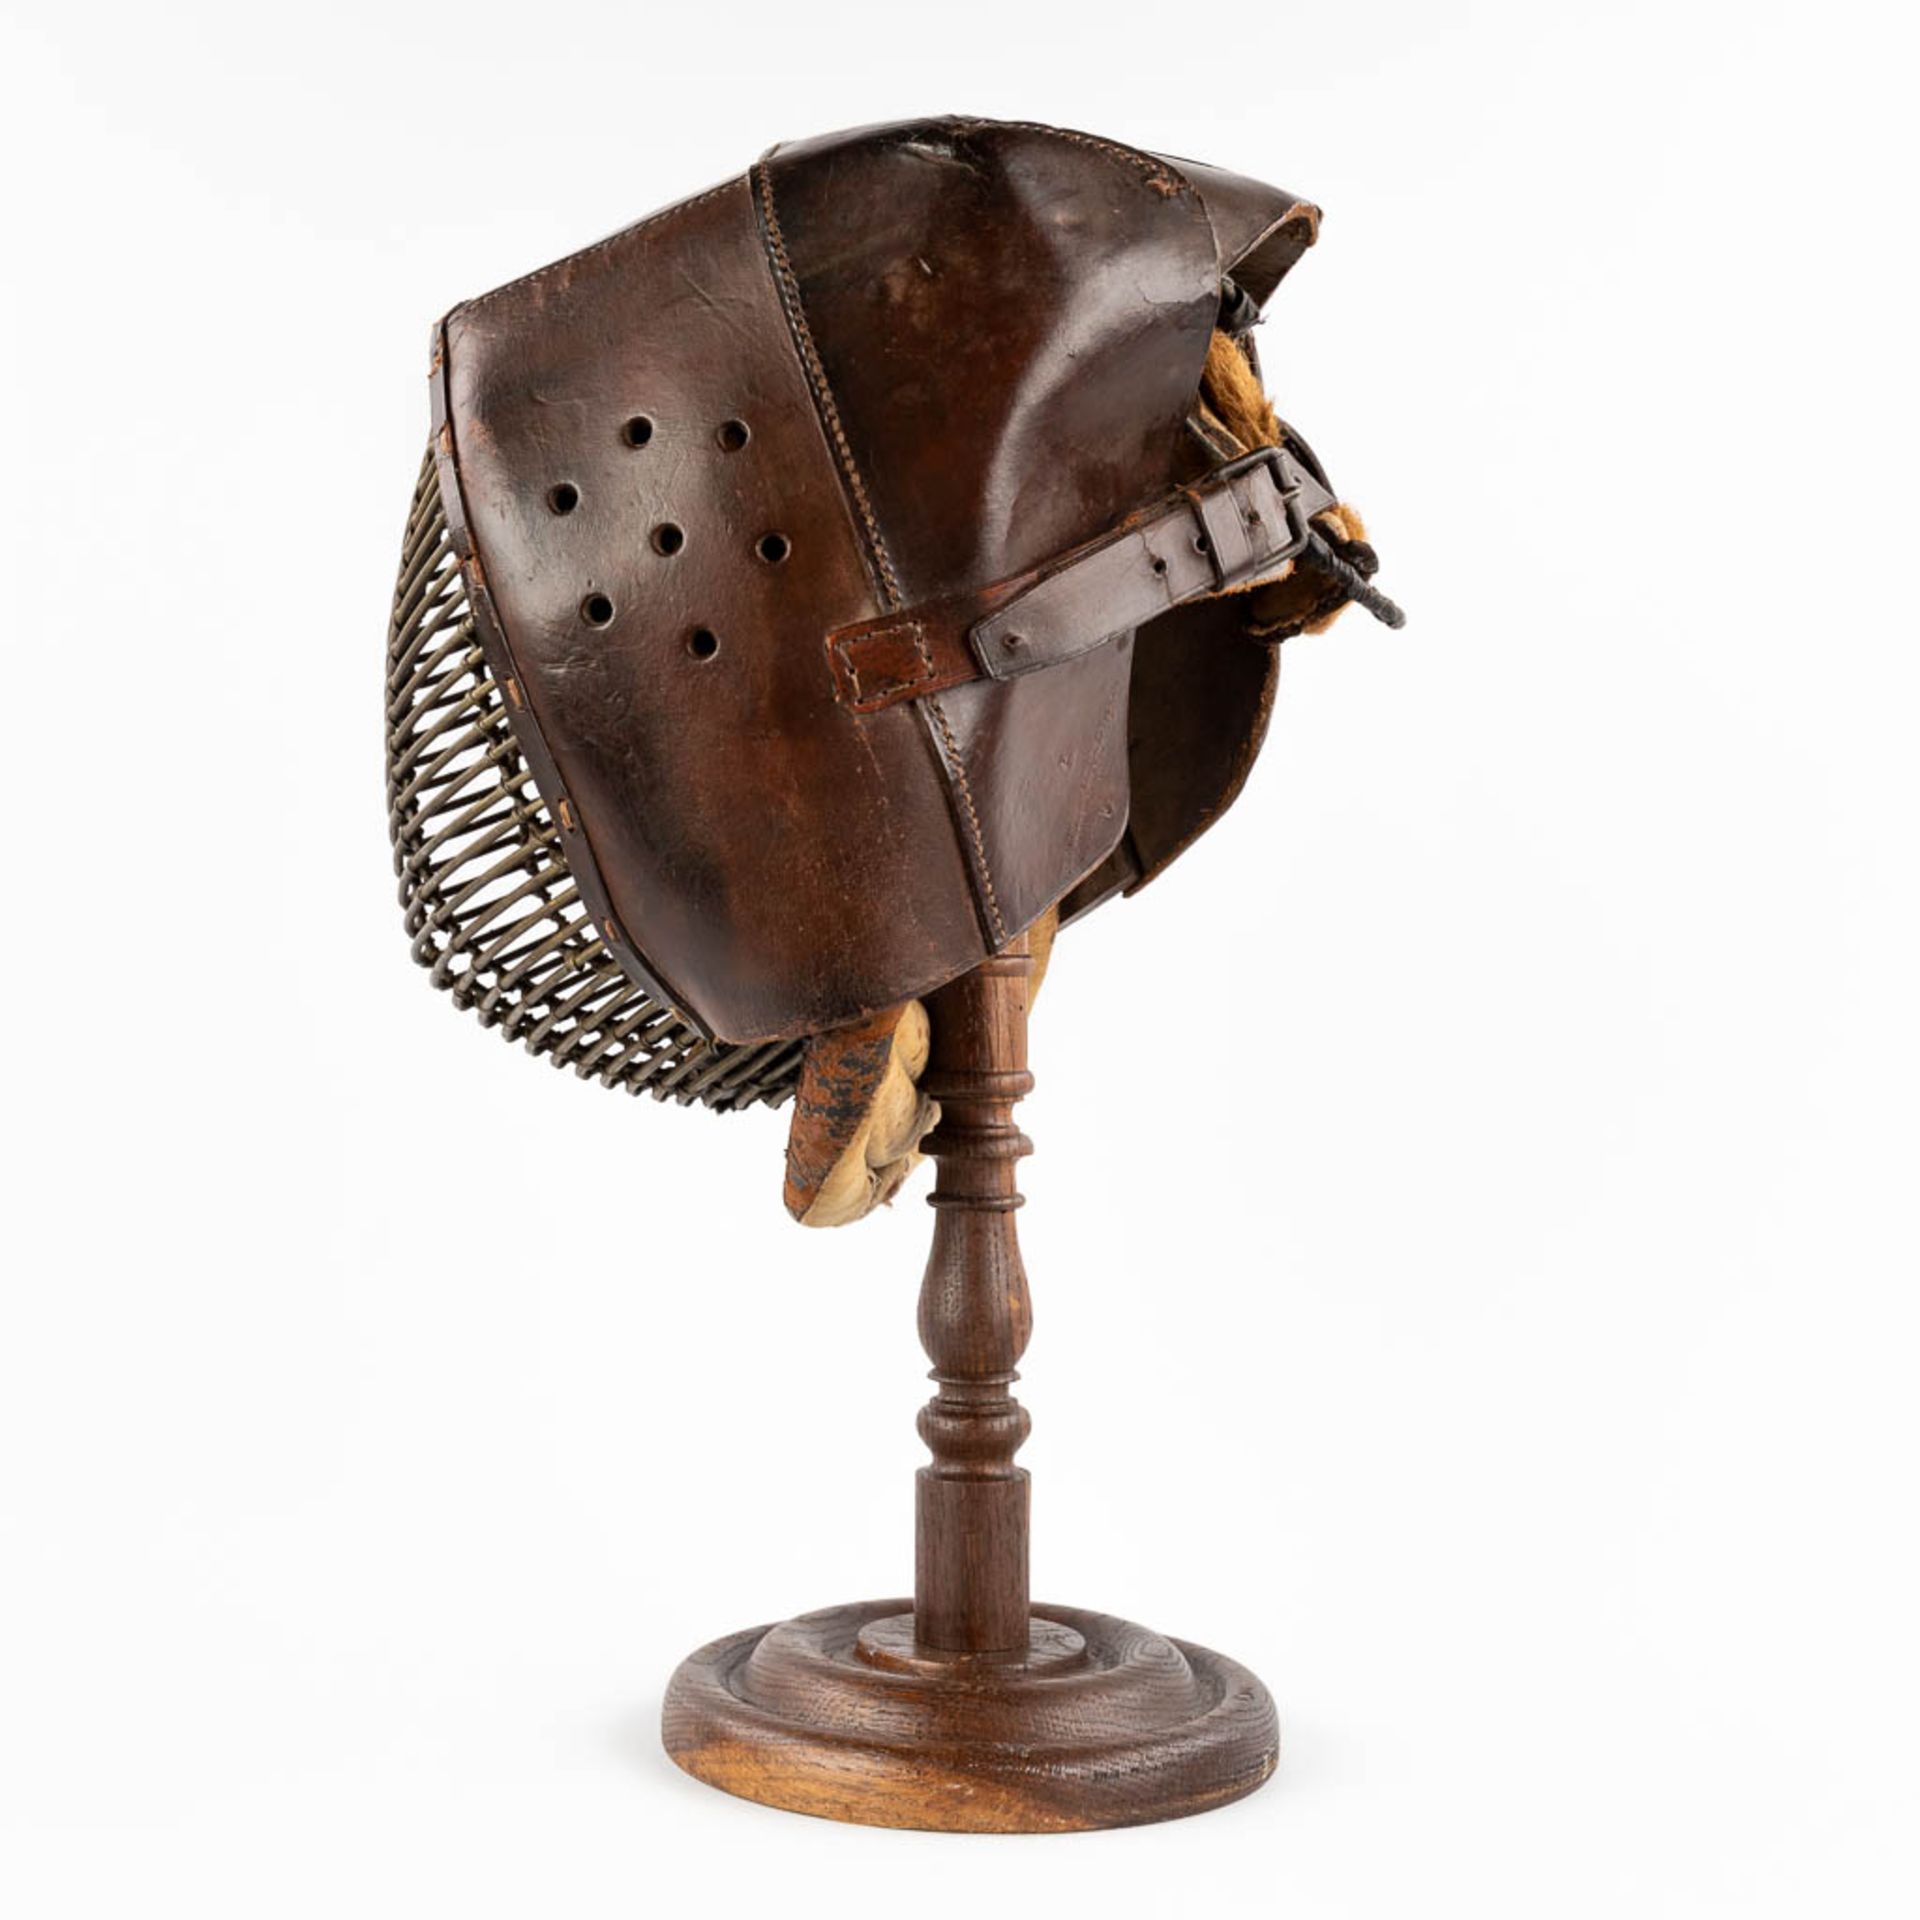 A decorative Fencing helmet on a stand, 'The Blackman Leather Goods', 1936. (D:24 x W:36 x H:29 cm) - Bild 4 aus 12